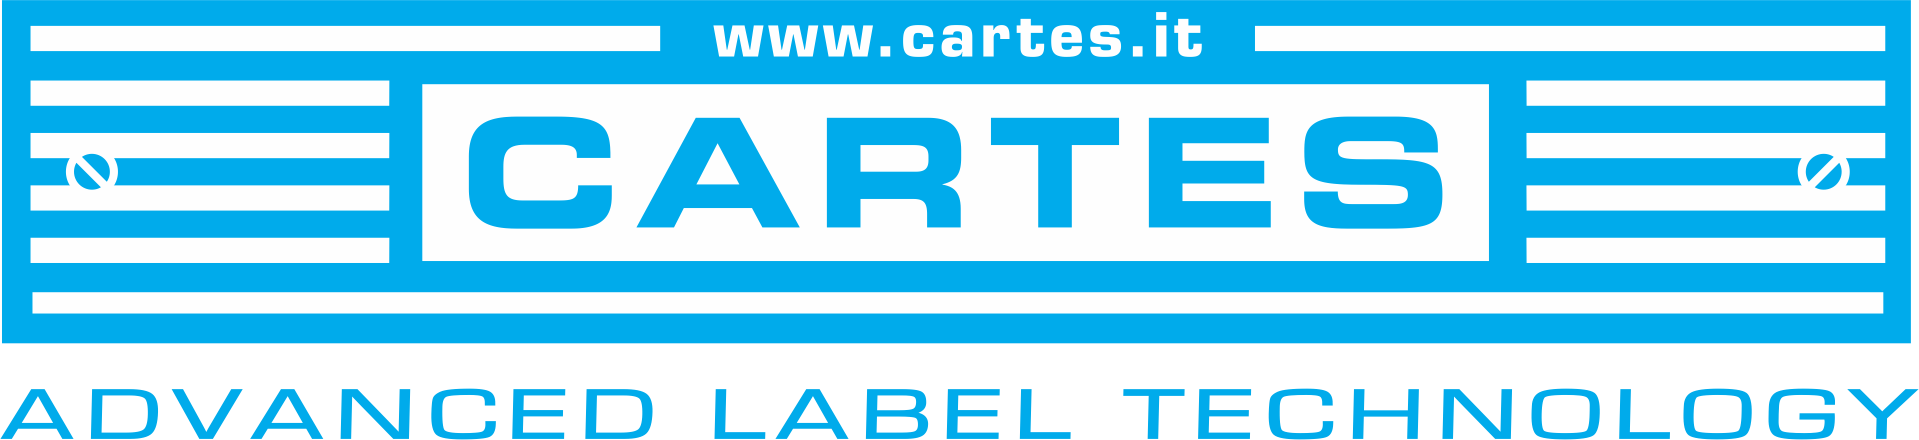 Cartes - Case history